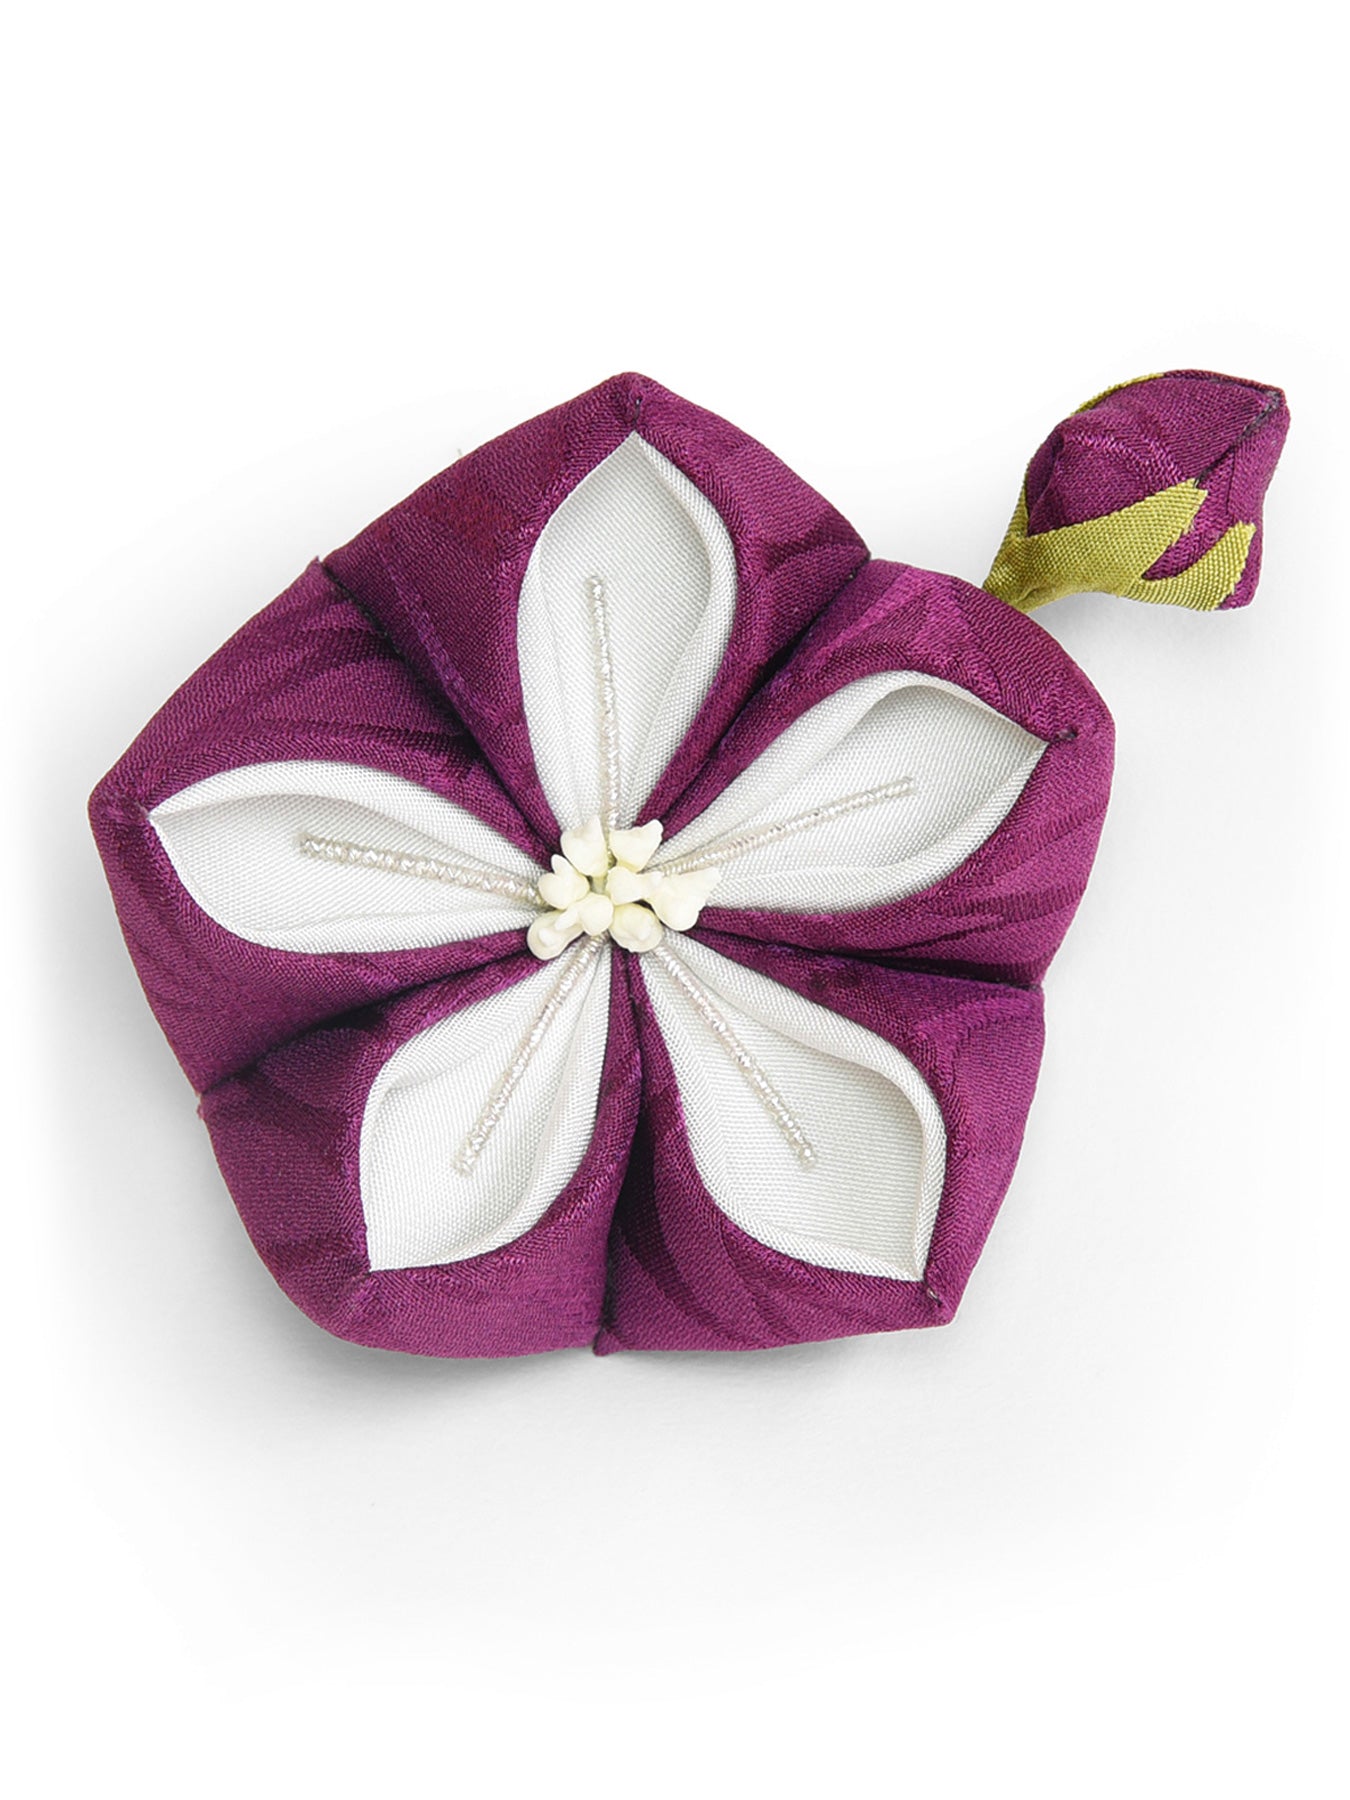 Bellflower Kanzashi Silk Hair Clip/Brooch in Purple